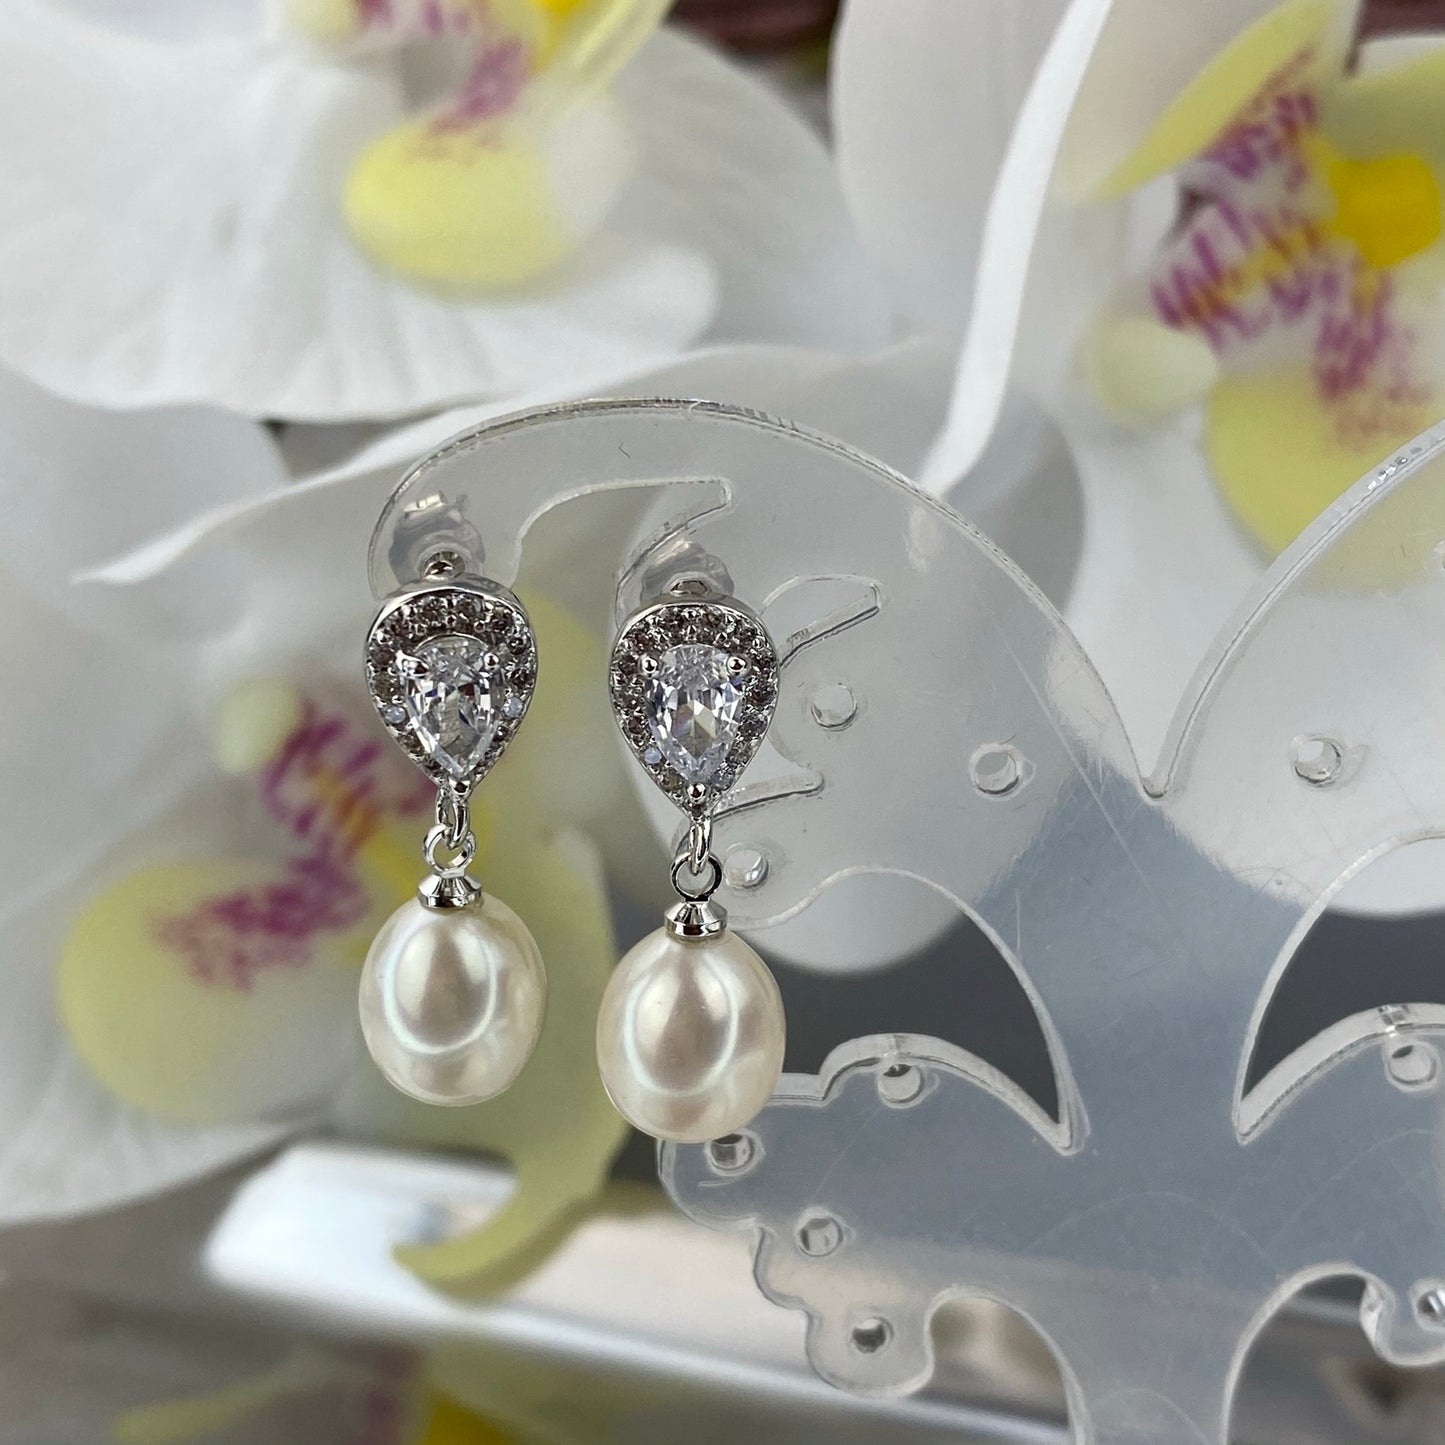 River pearl earrings (River Pearls)